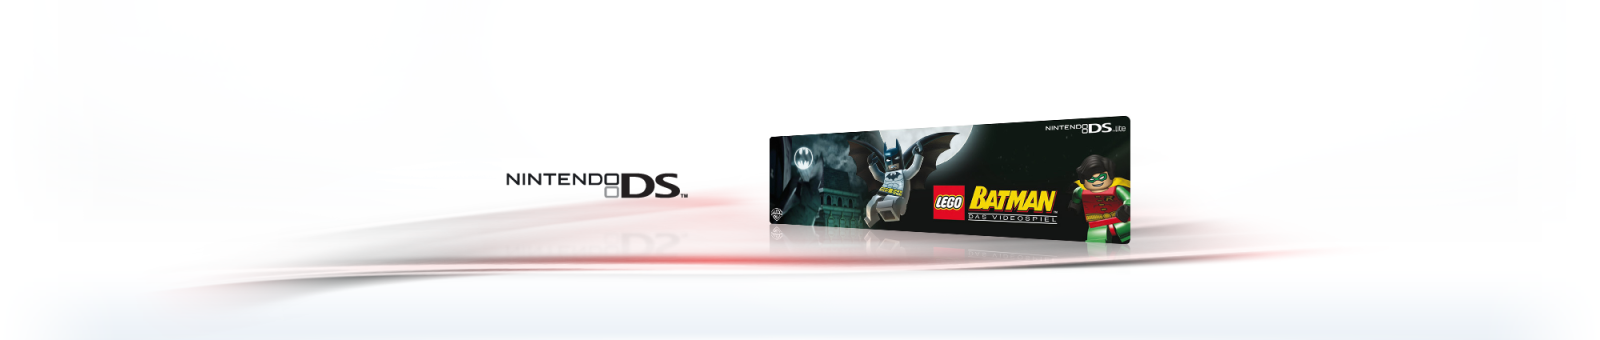 LEGO Batman: Das Videospiel